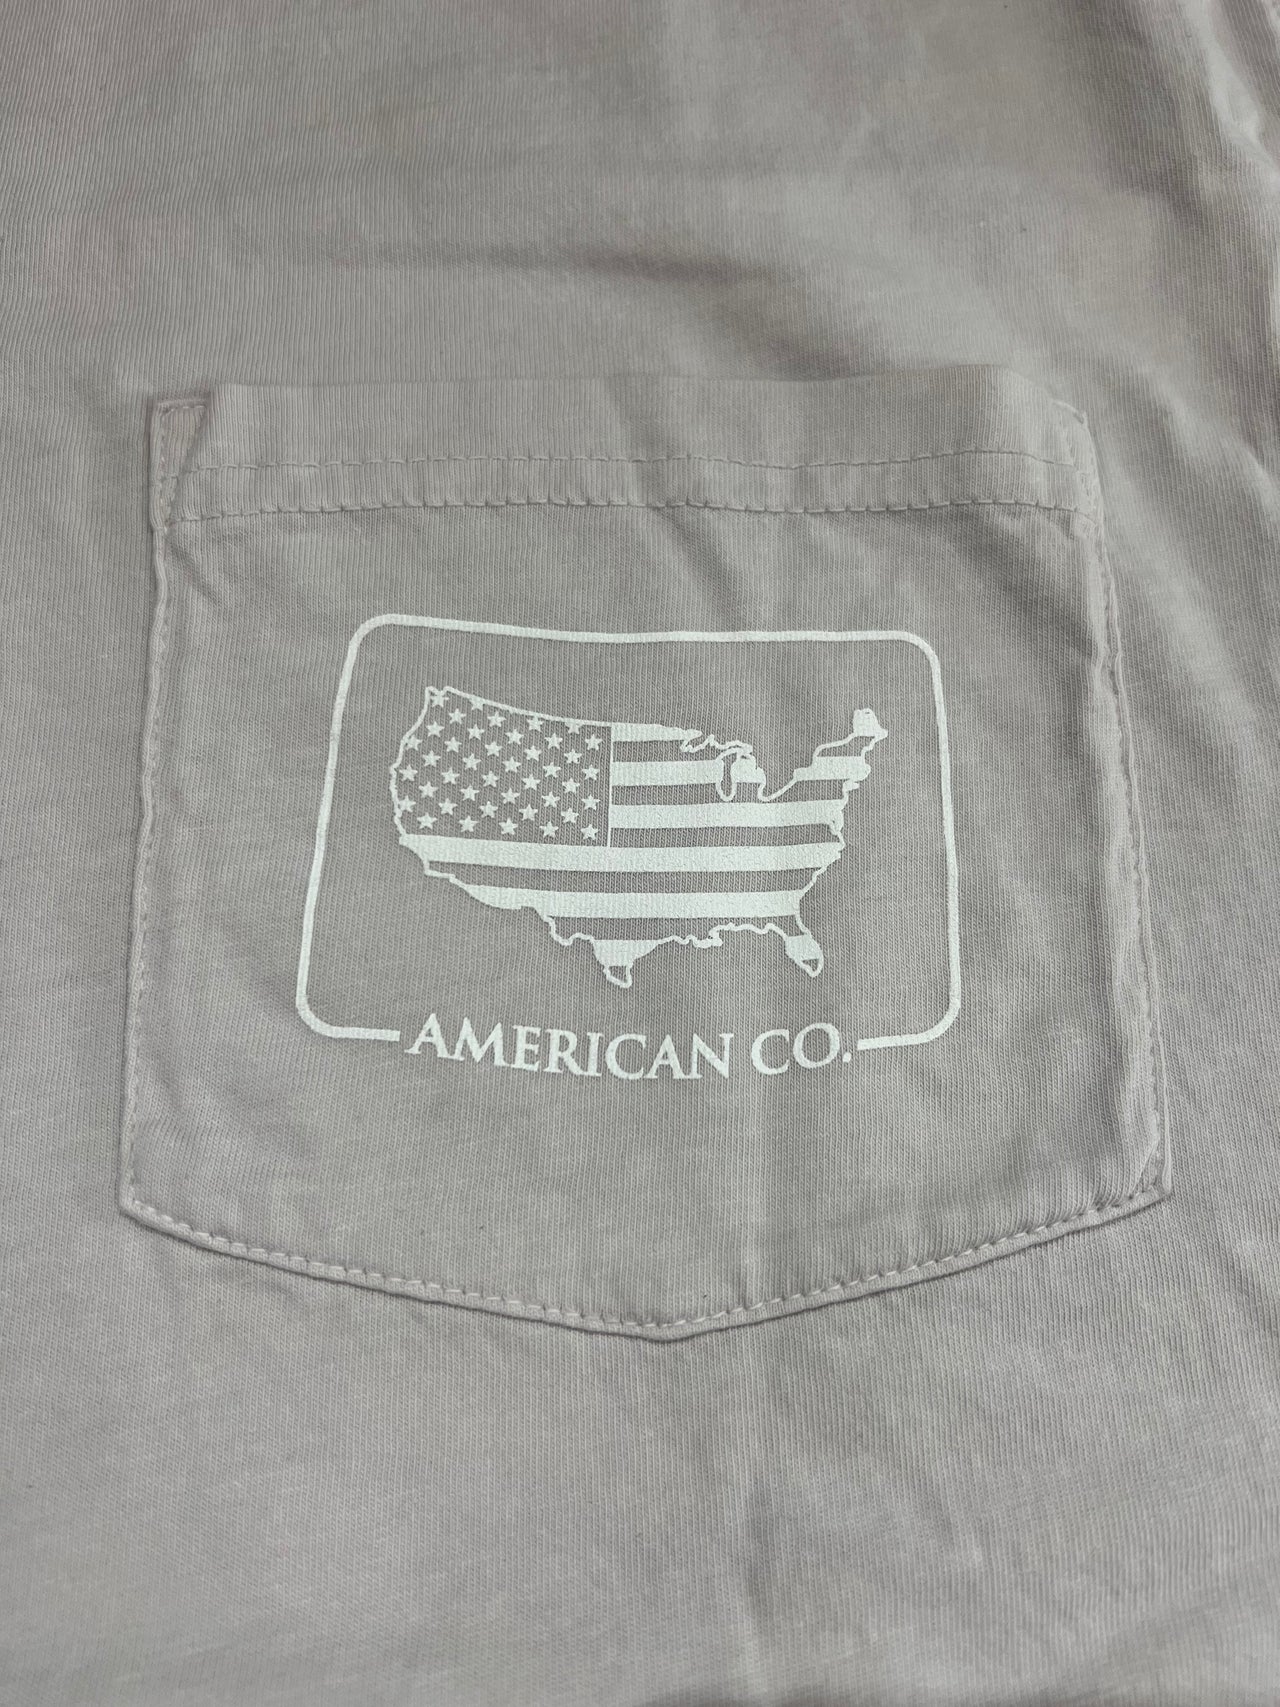 American Co USA Eagle SS Pocket Tee - Silver